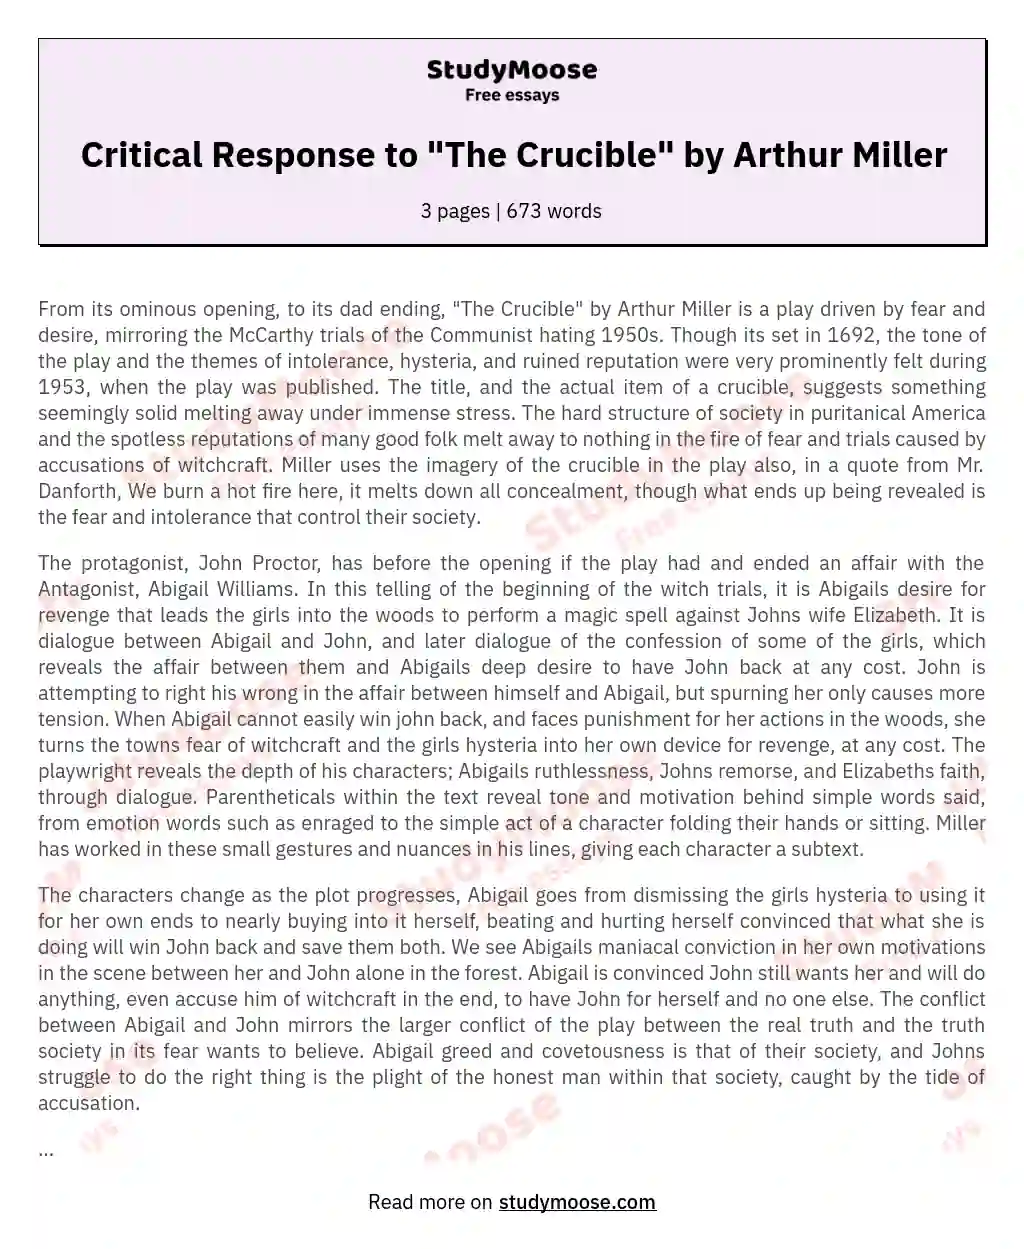 Critical Response to "The Crucible" by Arthur Miller